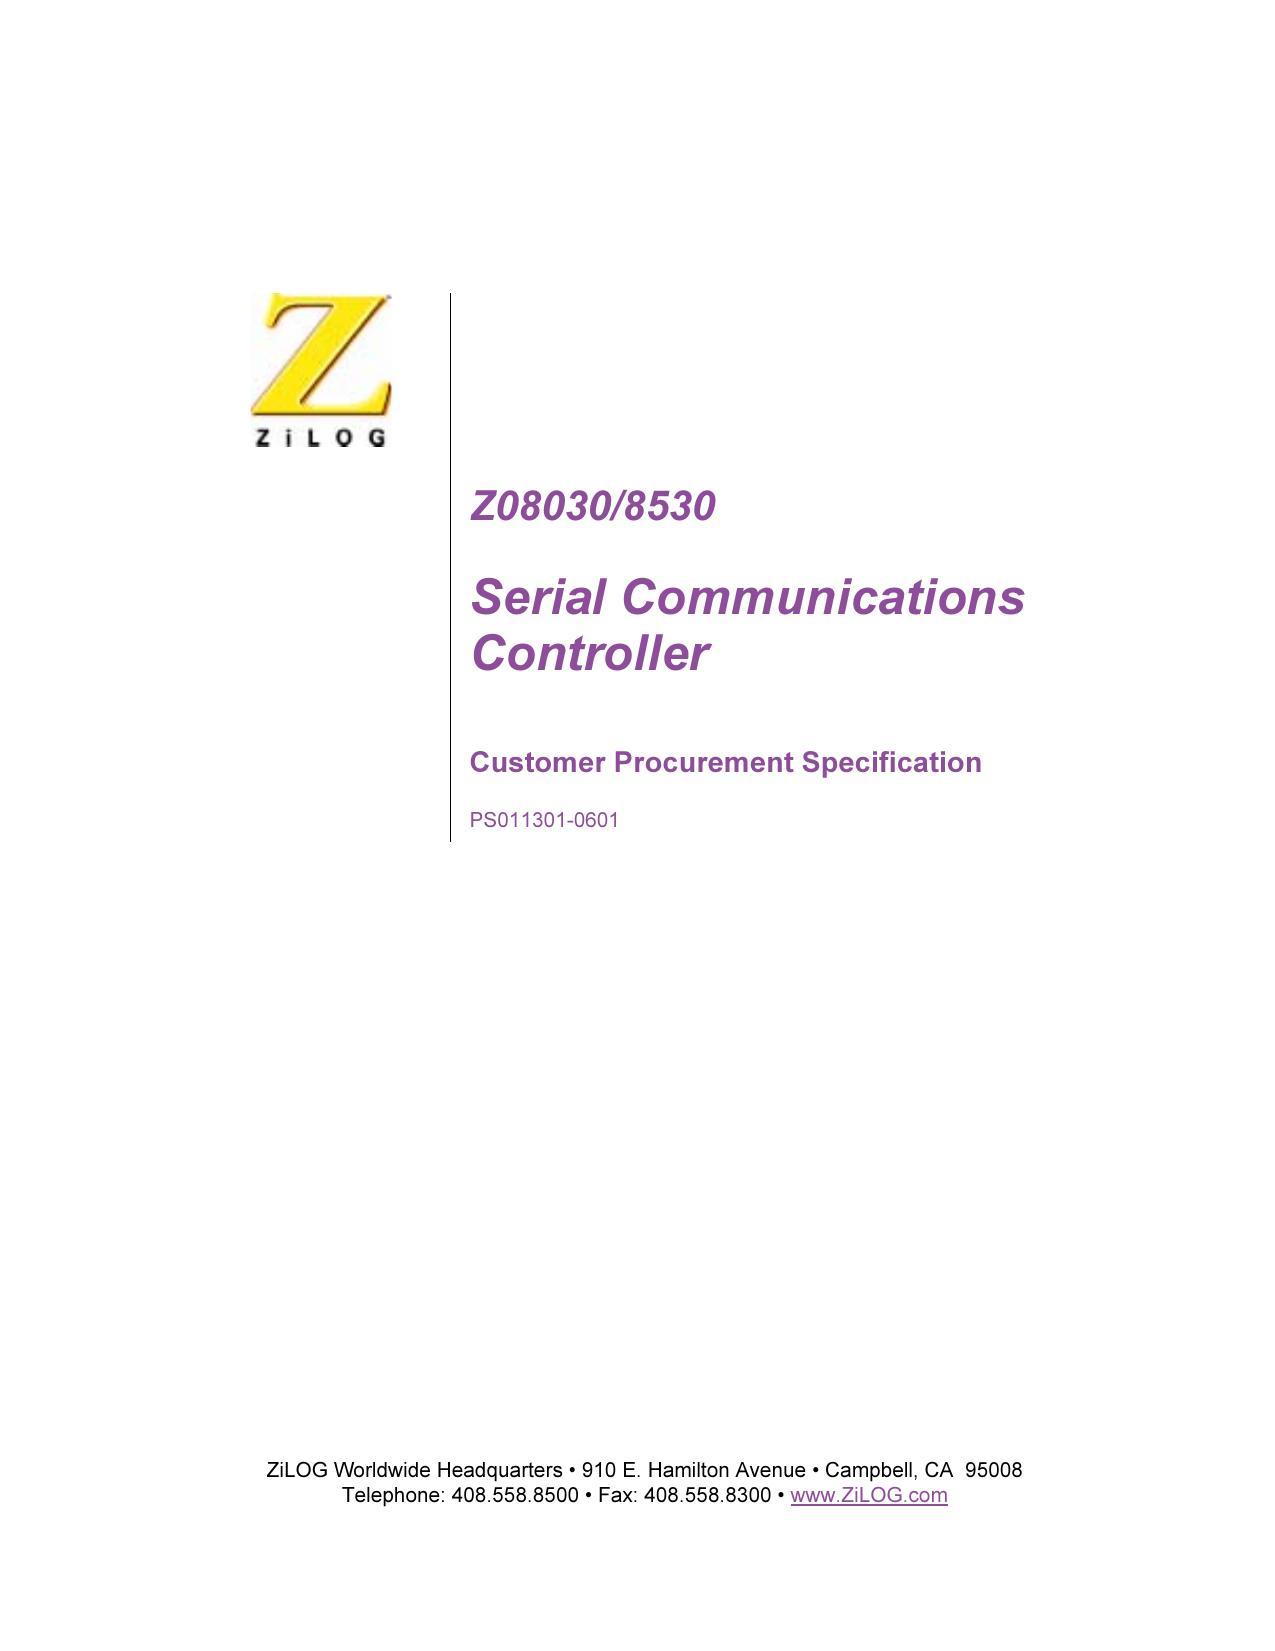 tl-2-l-0-g-2080308530-serial-communications-controller---customer-procurement-specification.pdf